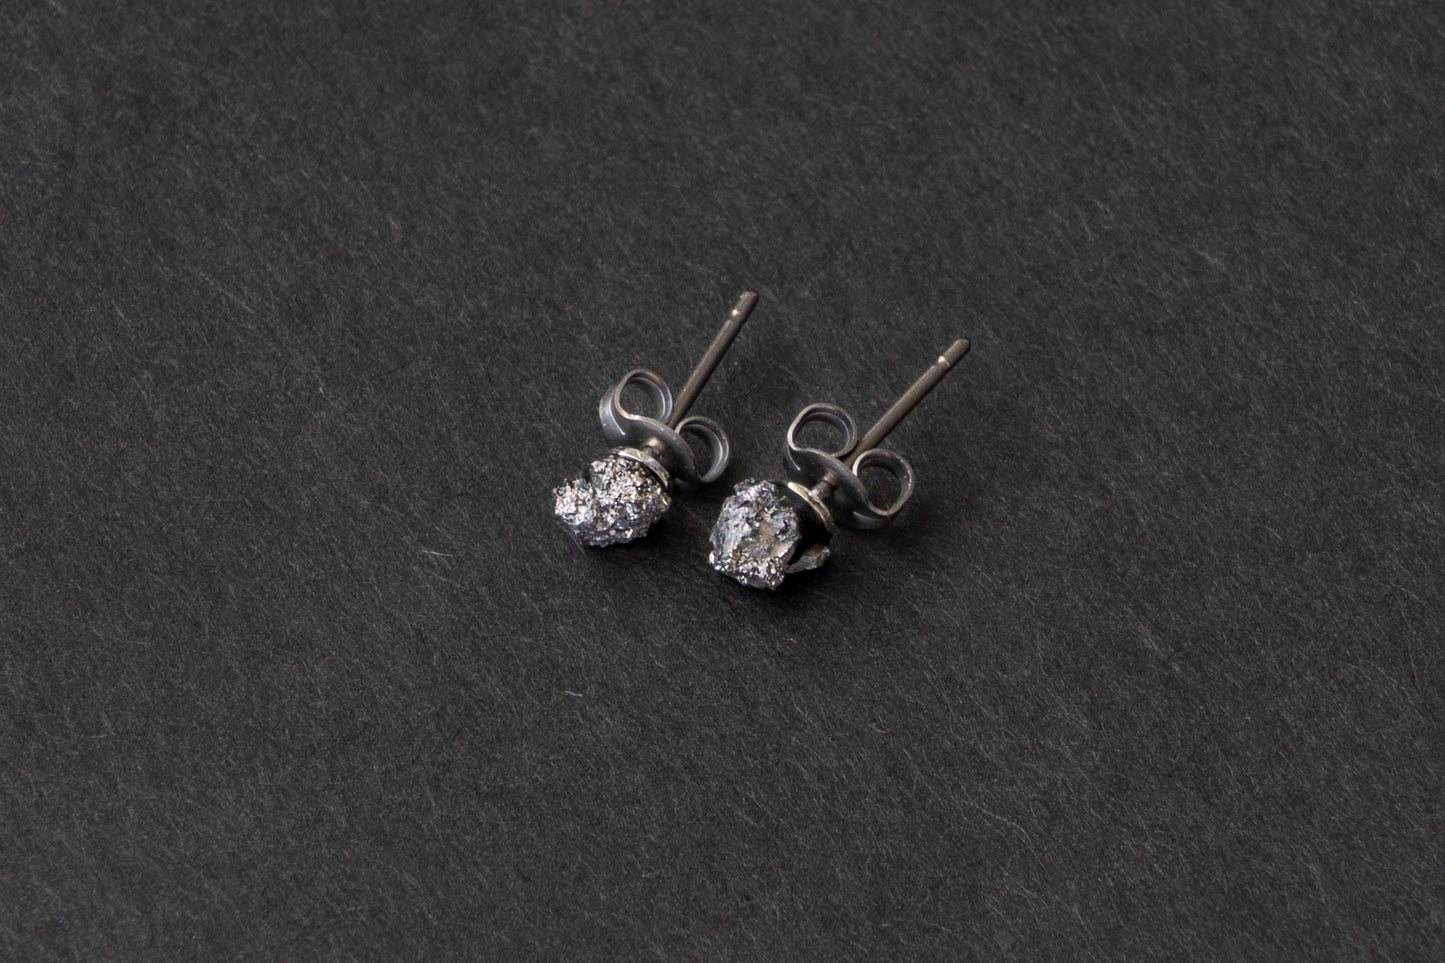 Tamahagane Jewelry Earrings Small